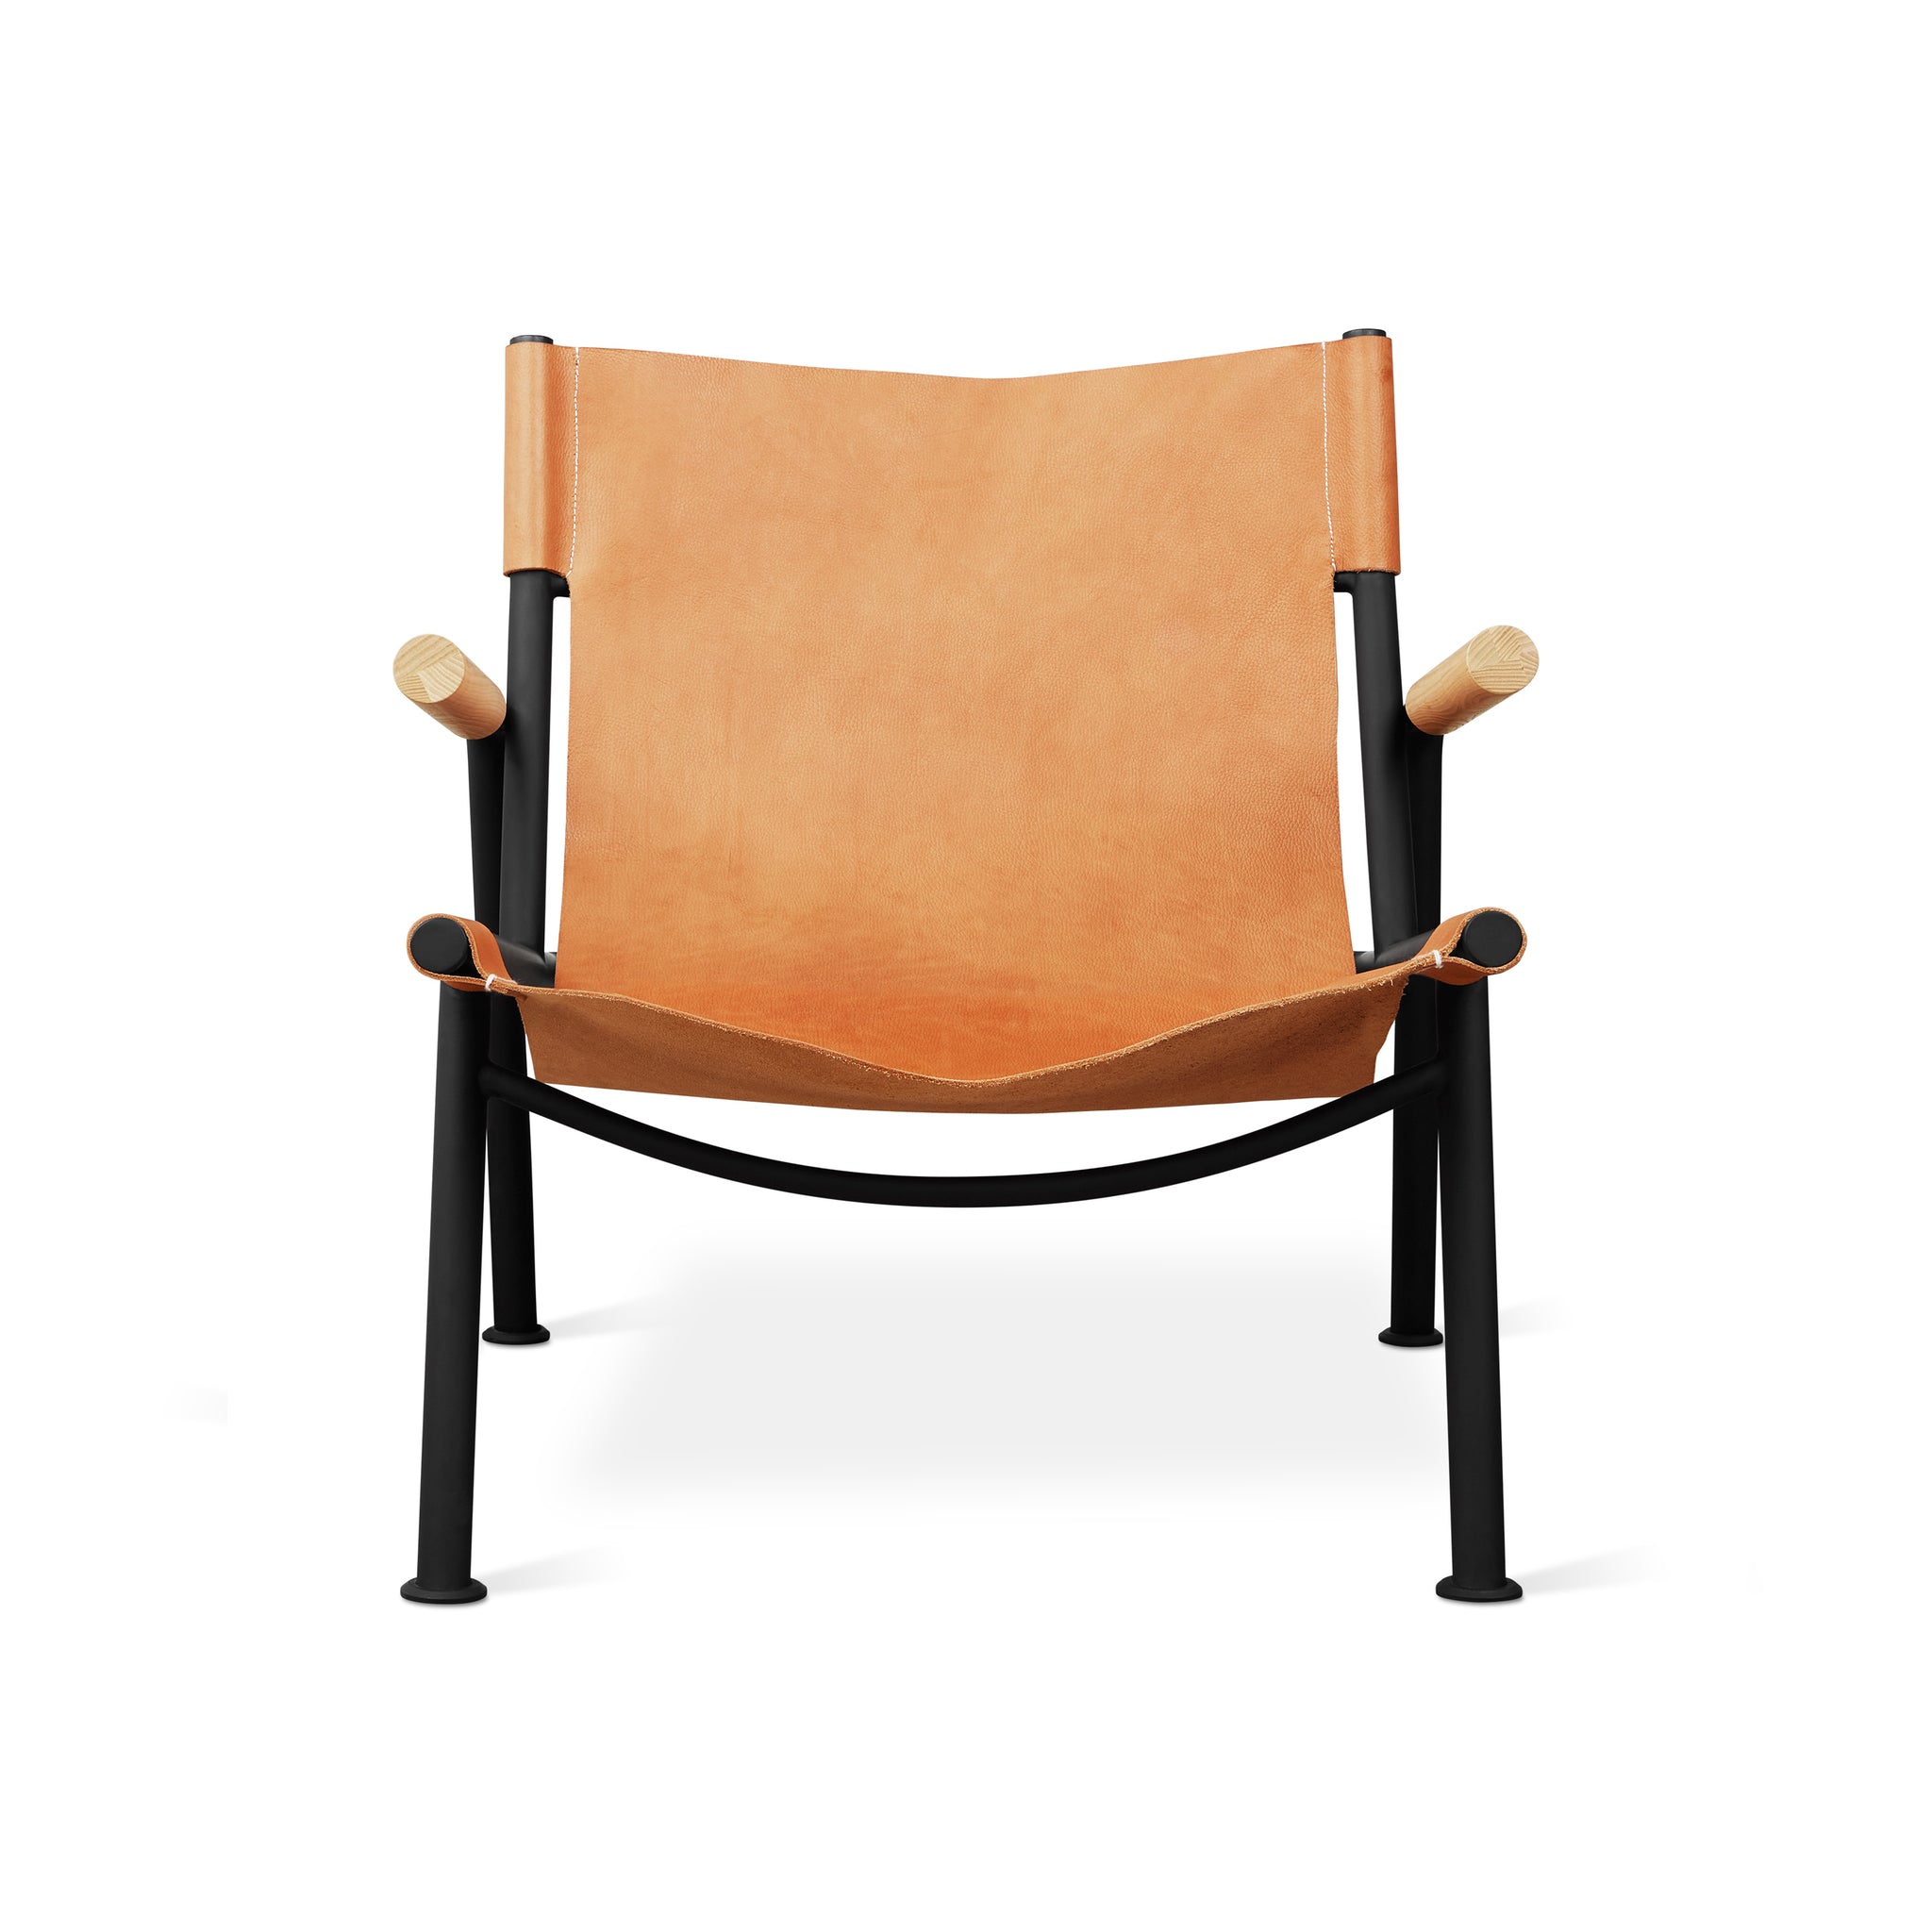 Wyatt sling chair sorrel Havana leather front view